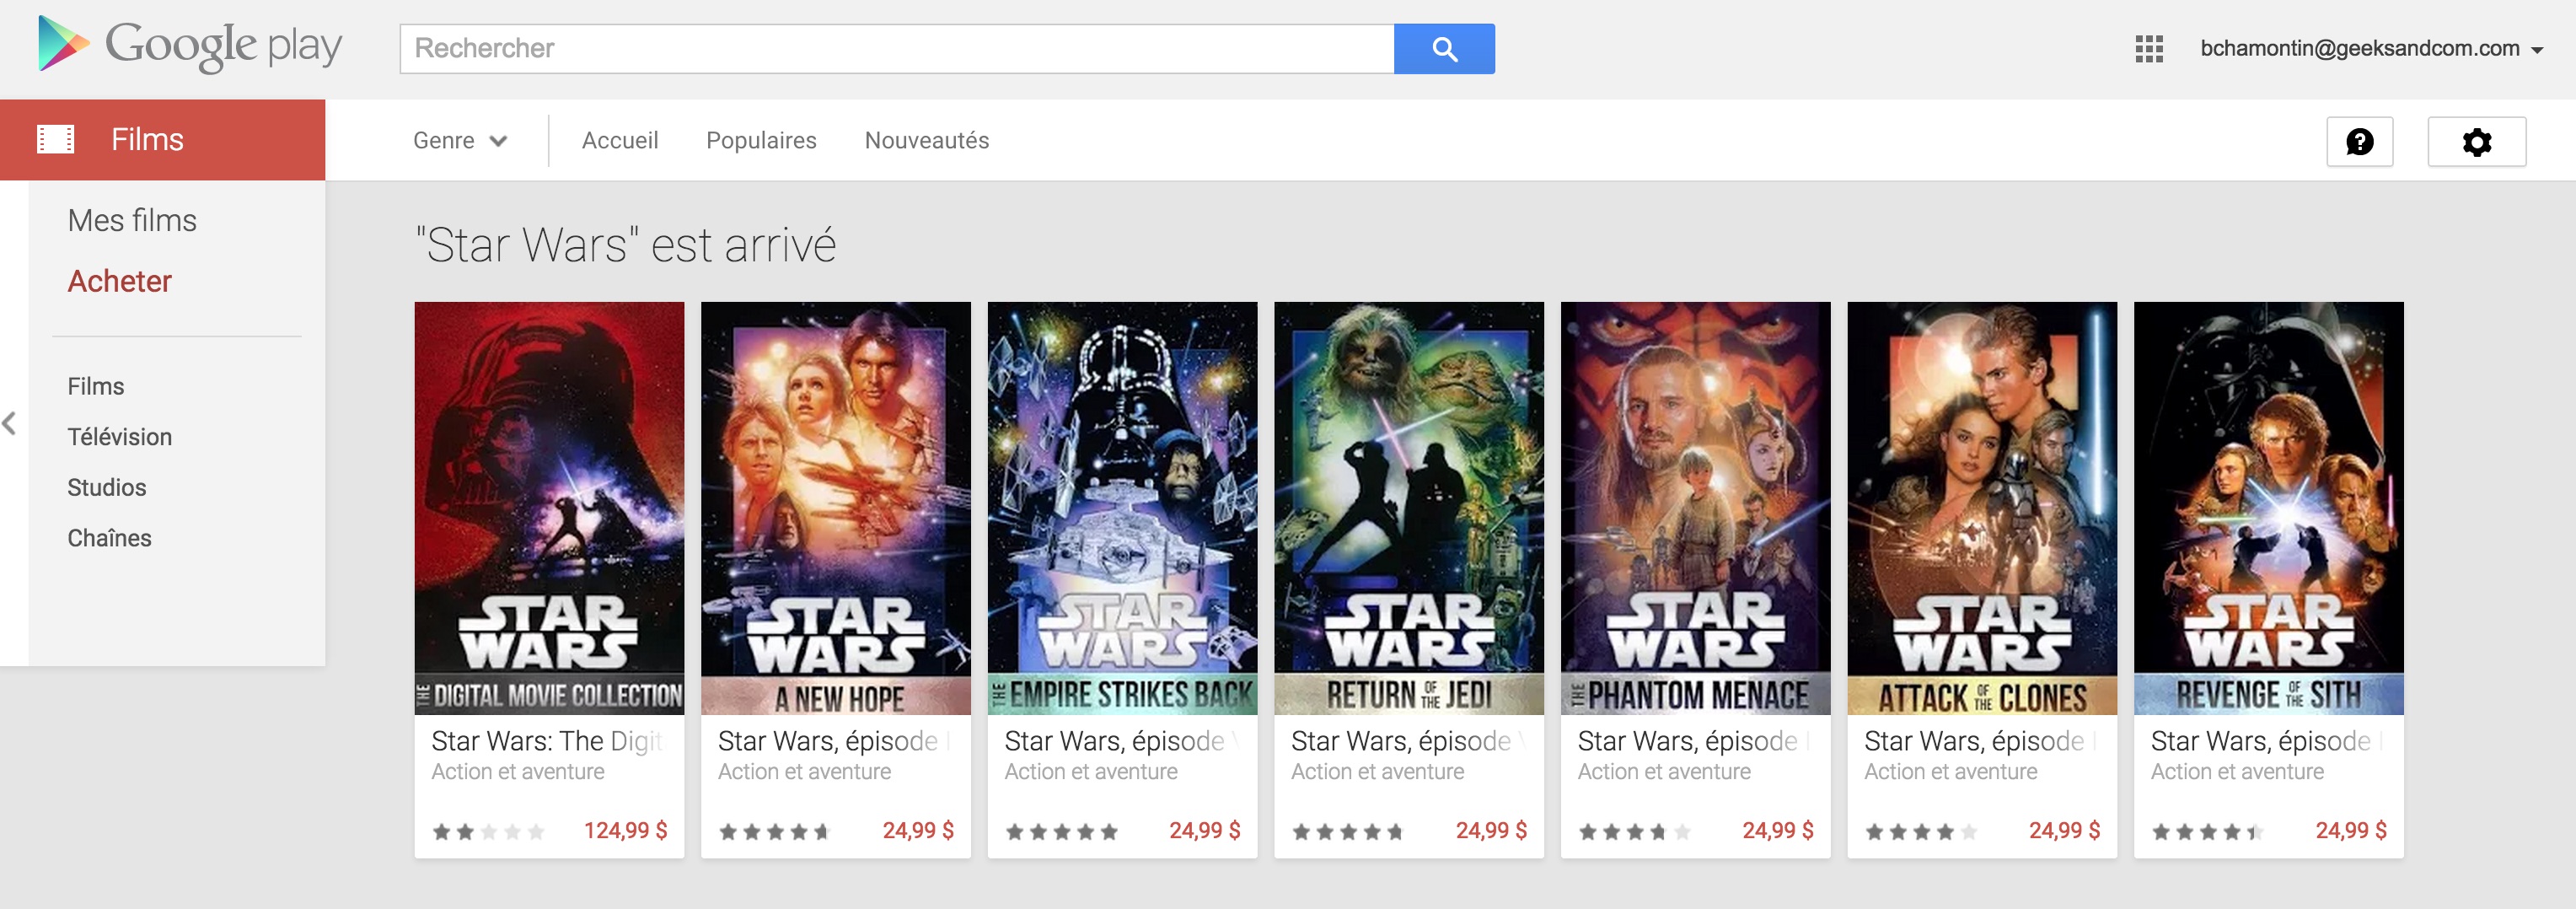 Star Wars Digital Movie Collection - Google Play